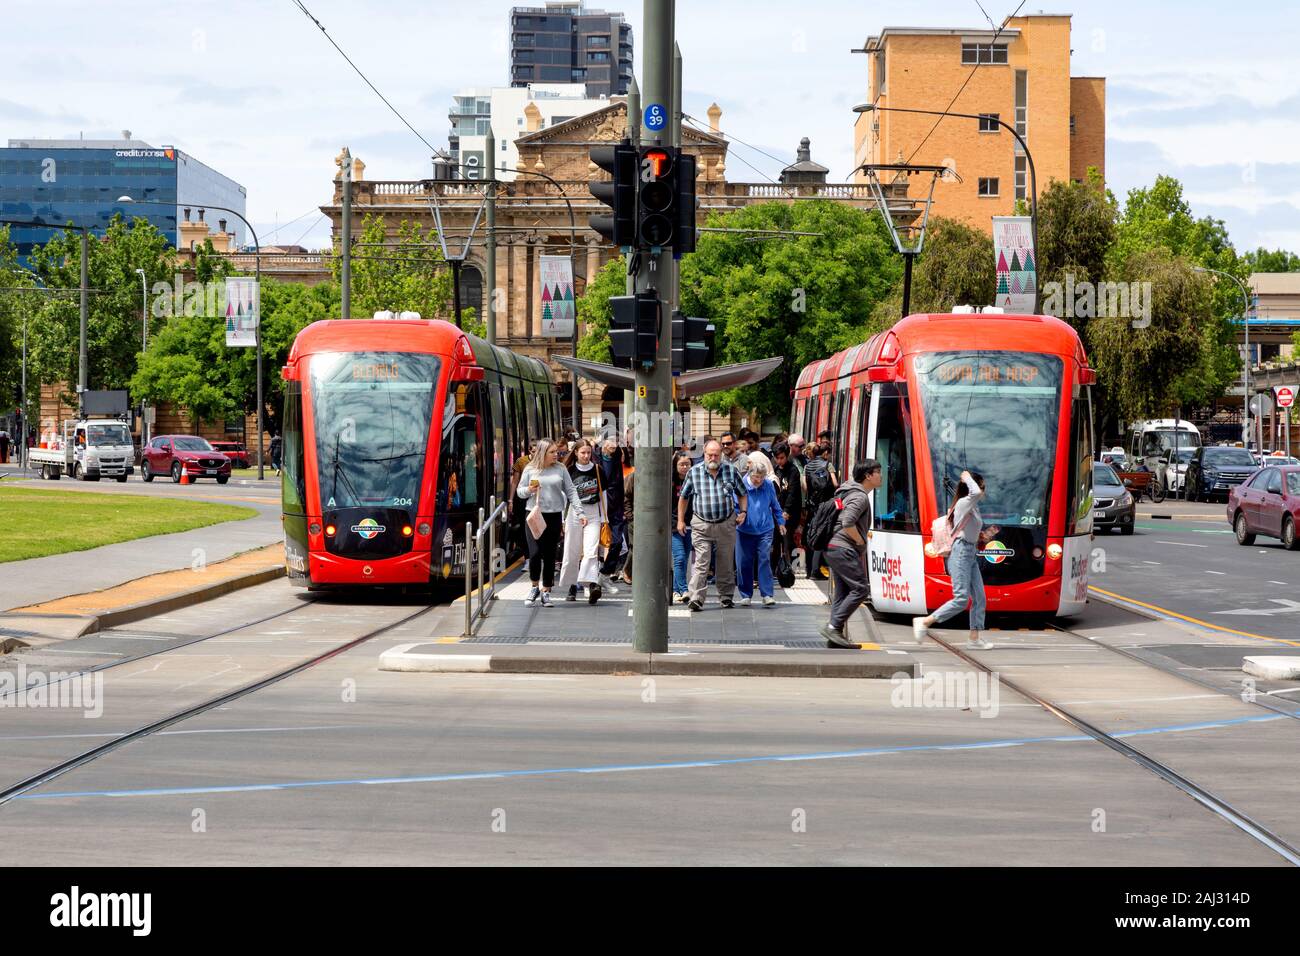 Adelaide Straßenbahnen; Passagiere aussteigen Straßenbahnen an einer Straßenbahnhaltestelle, Victoria Square, Adelaide. Stockfoto